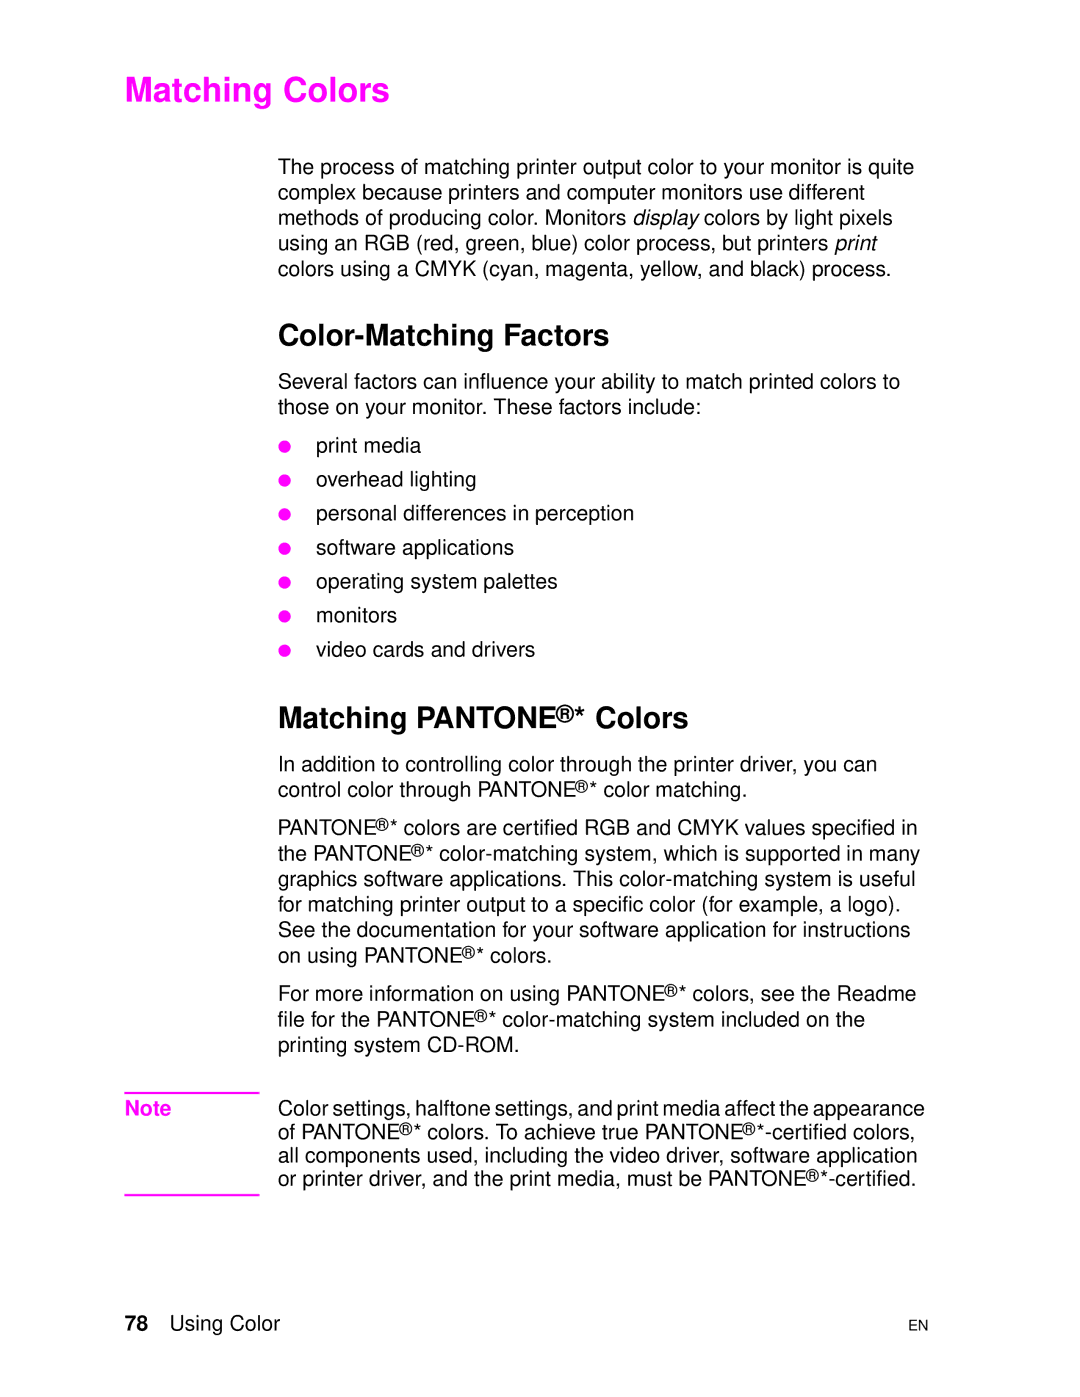 HP 4500DN manual Matching Colors, Color-Matching Factors, Matching Pantone * Colors 